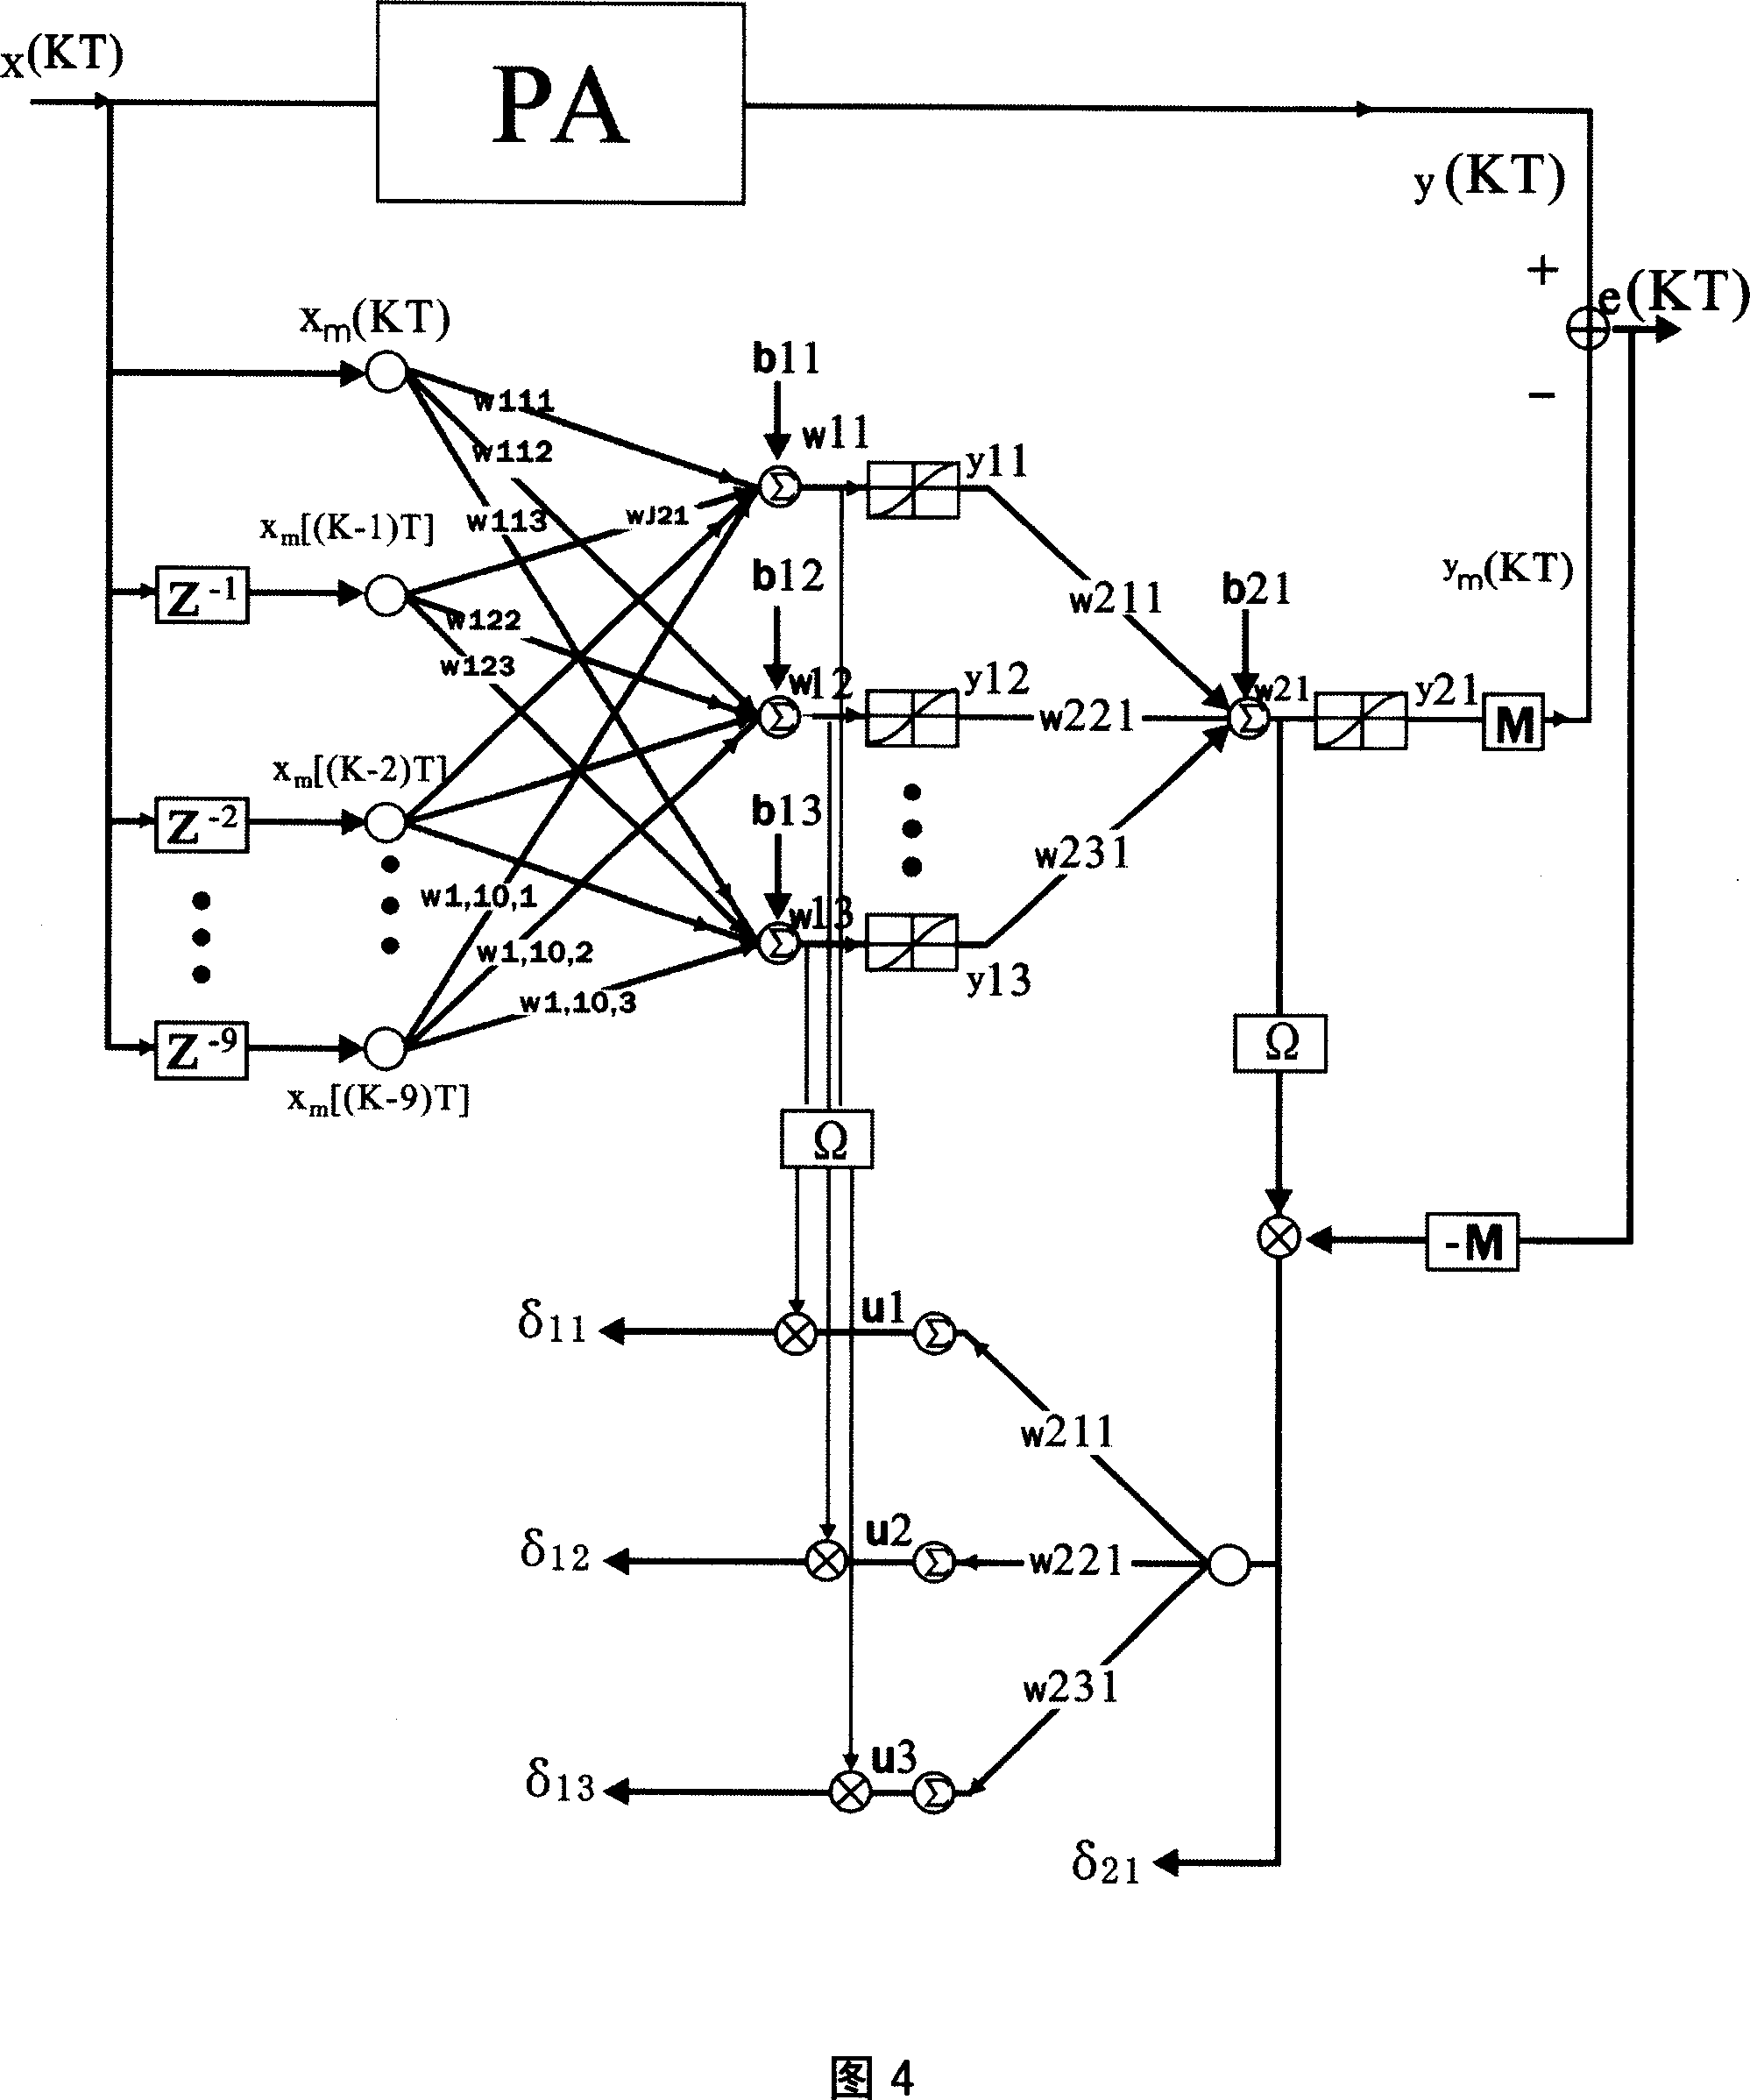 Excitation apparatus of digital TV transmitter based on nerval net predistortion technology